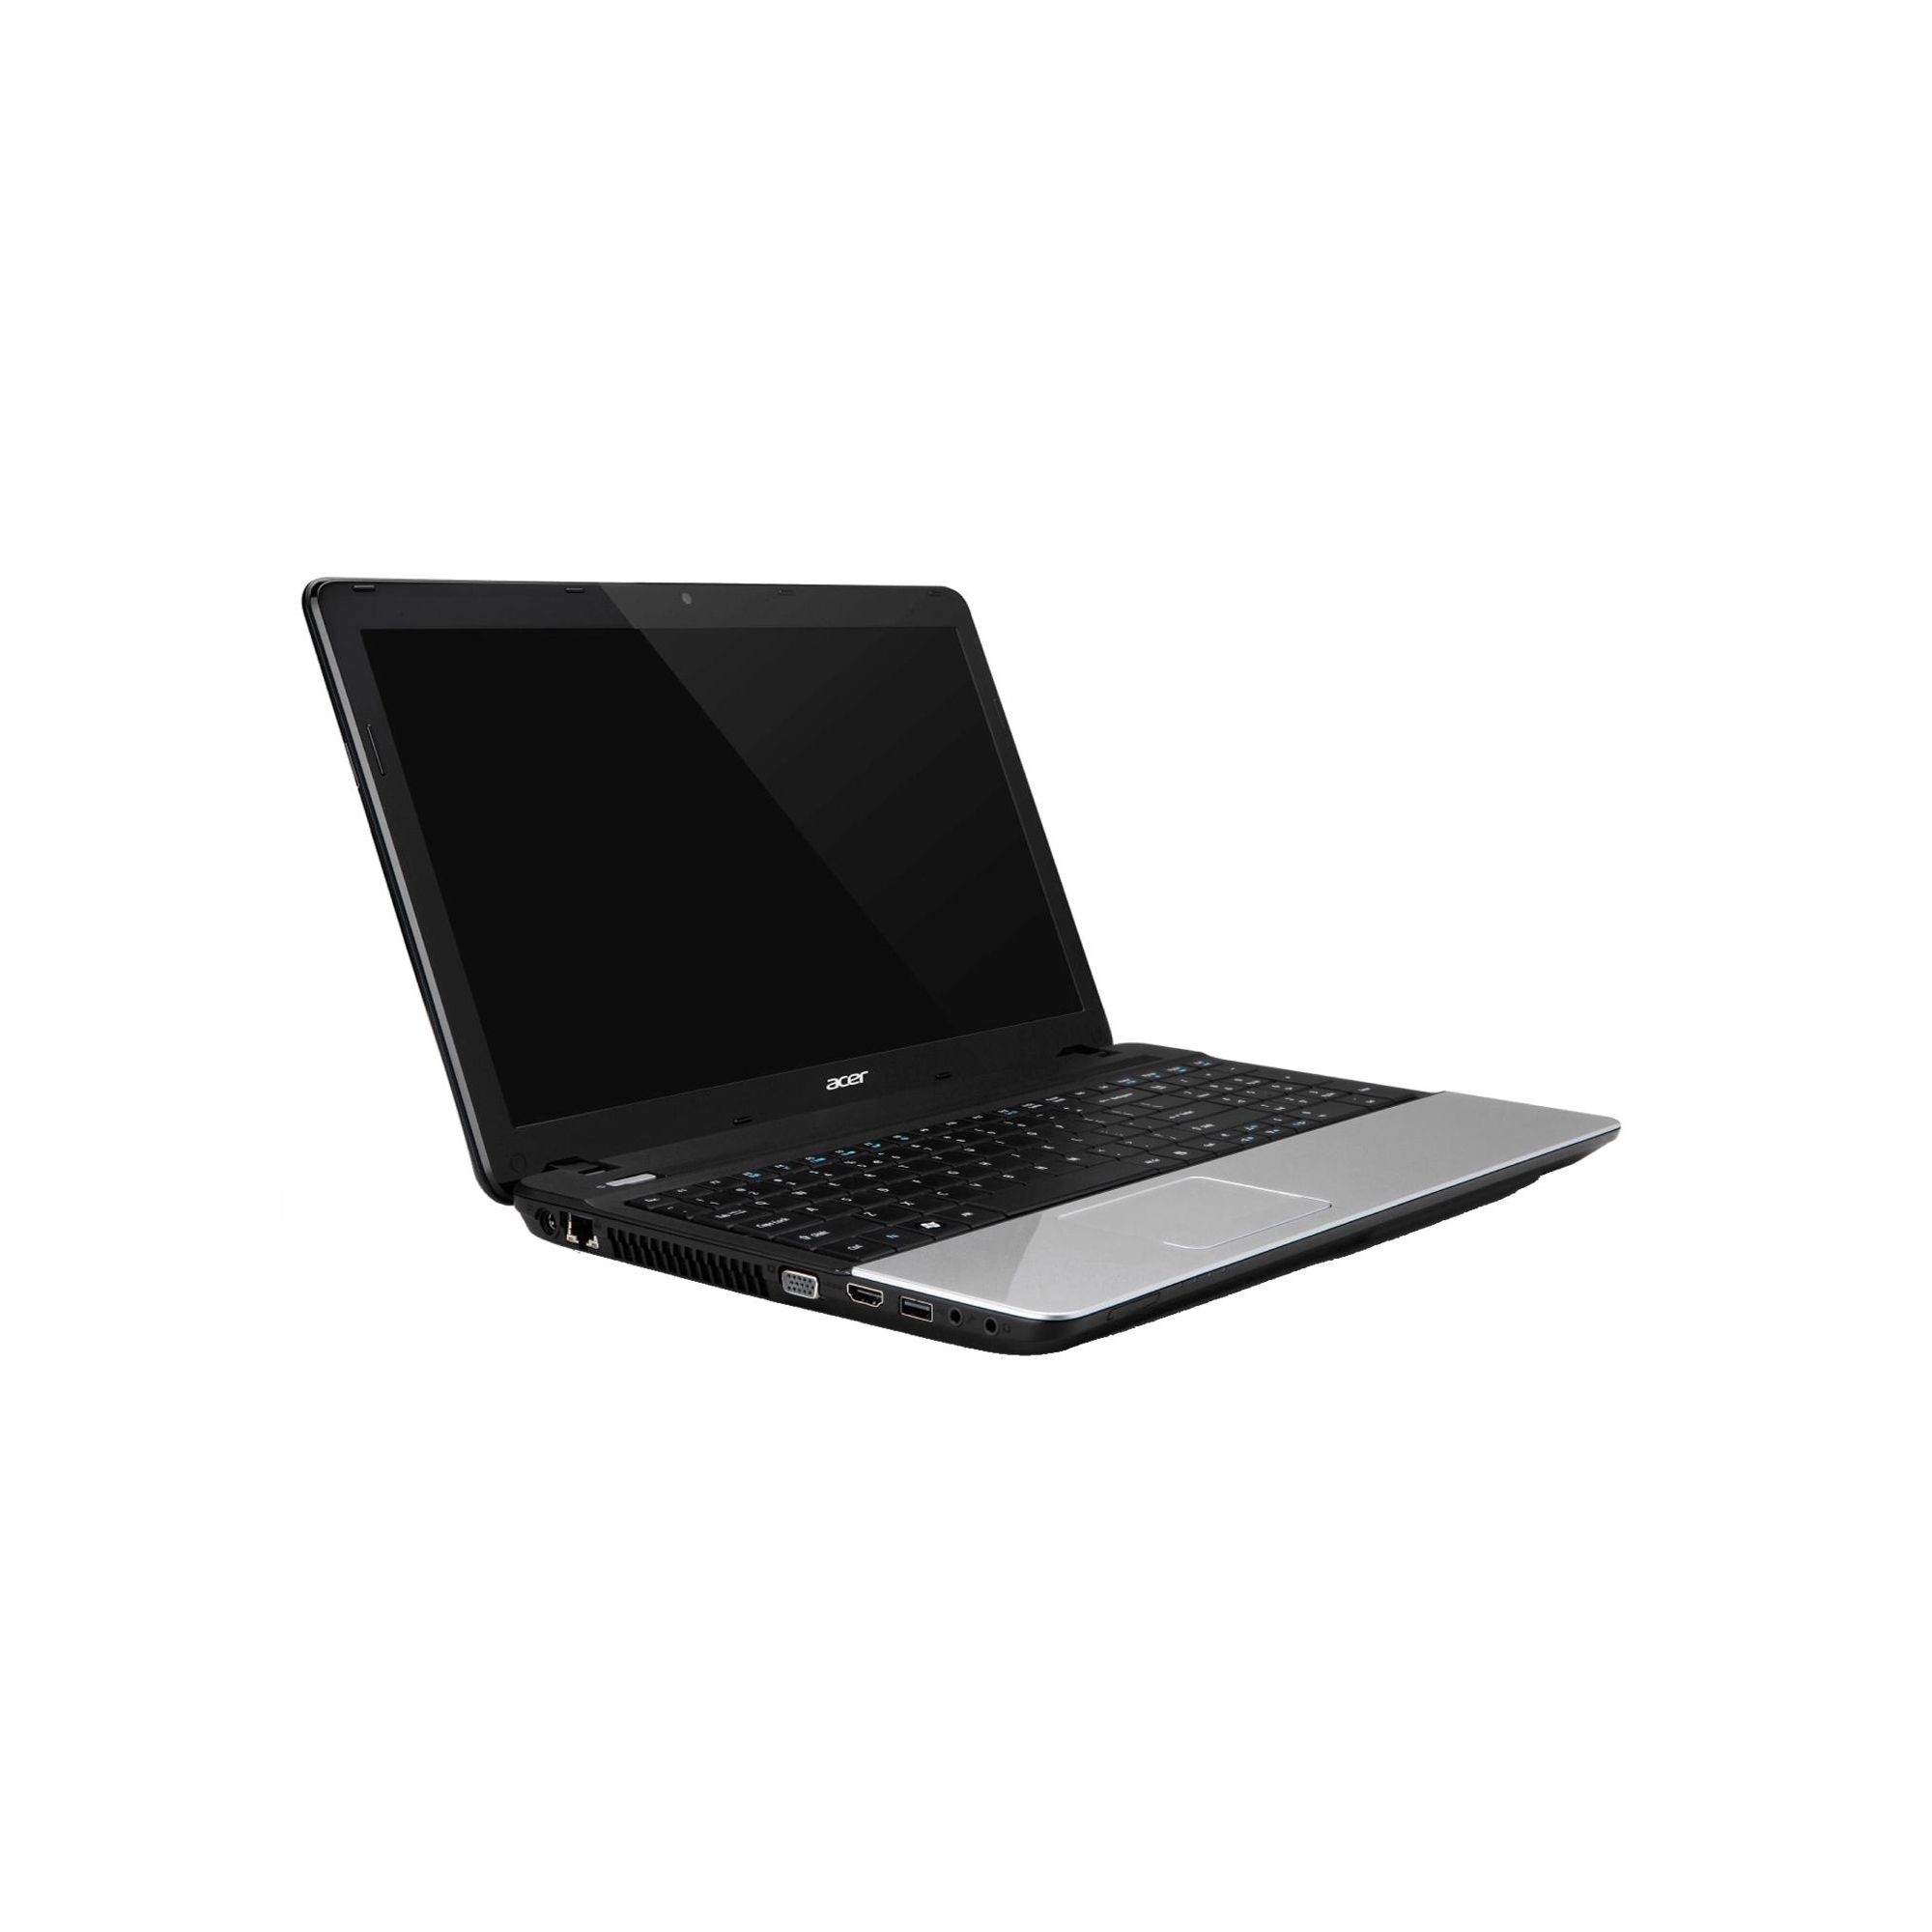 Acer Aspire E1-571-33114G50Mnks (15.6 inch) Notebook PC Core i3 (3110M) 2.4GHz 4GB 500GB DVD Writer WLAN Webcam Windows 8 64-bit (Intel GMA HD) at Tesco Direct